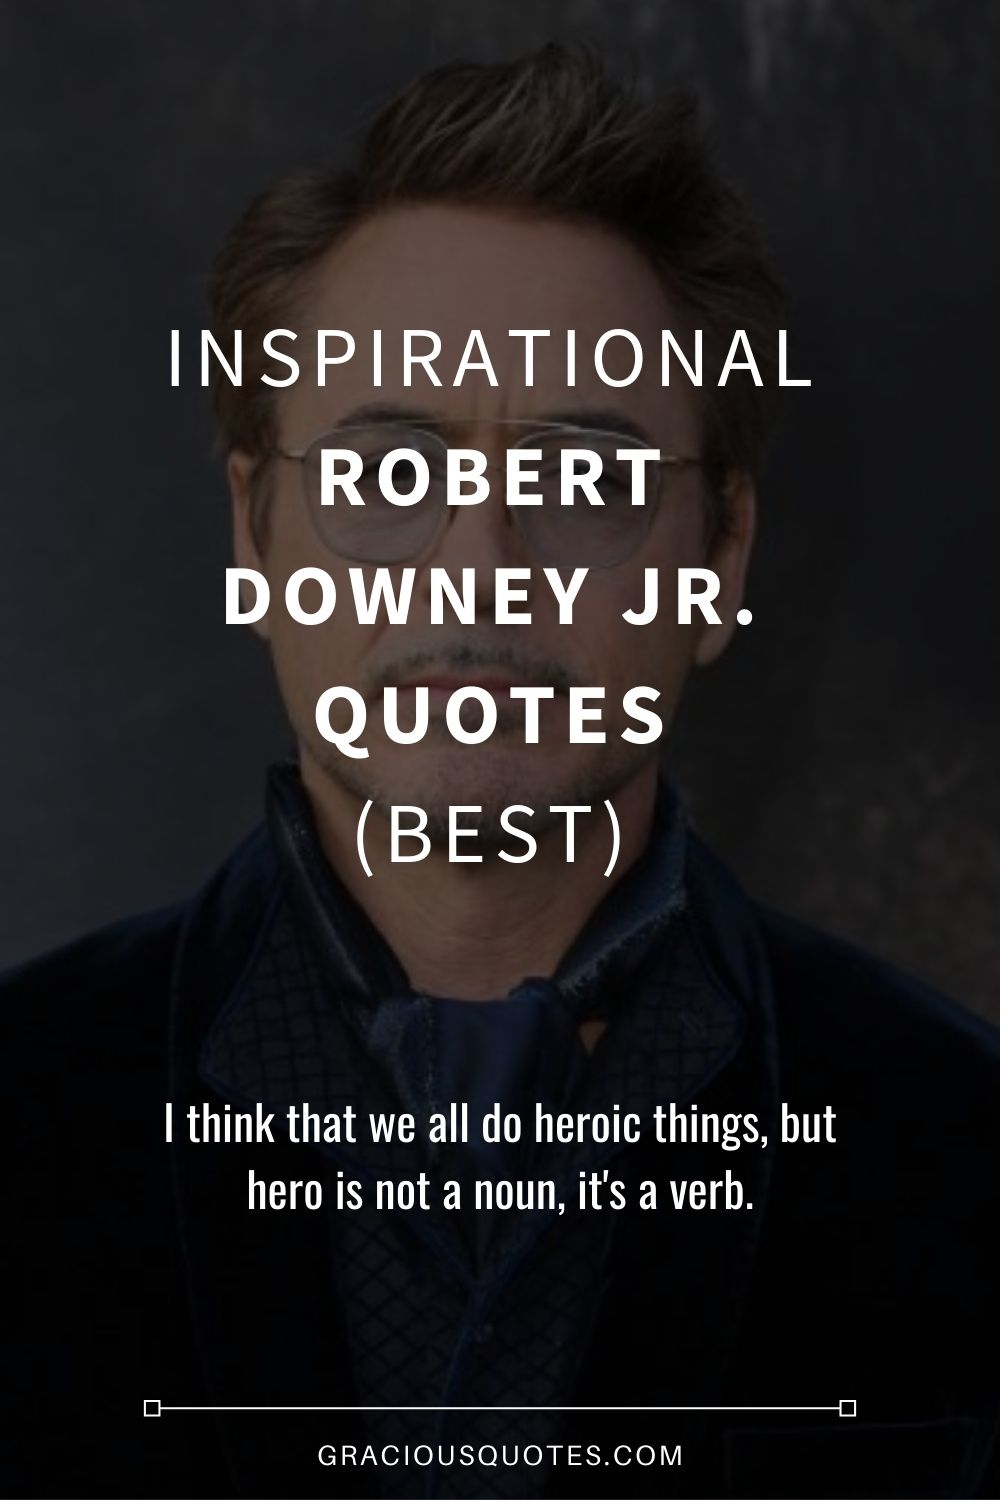 Inspirational Robert Downey Jr. Quotes (BEST) - Gracious Quotes